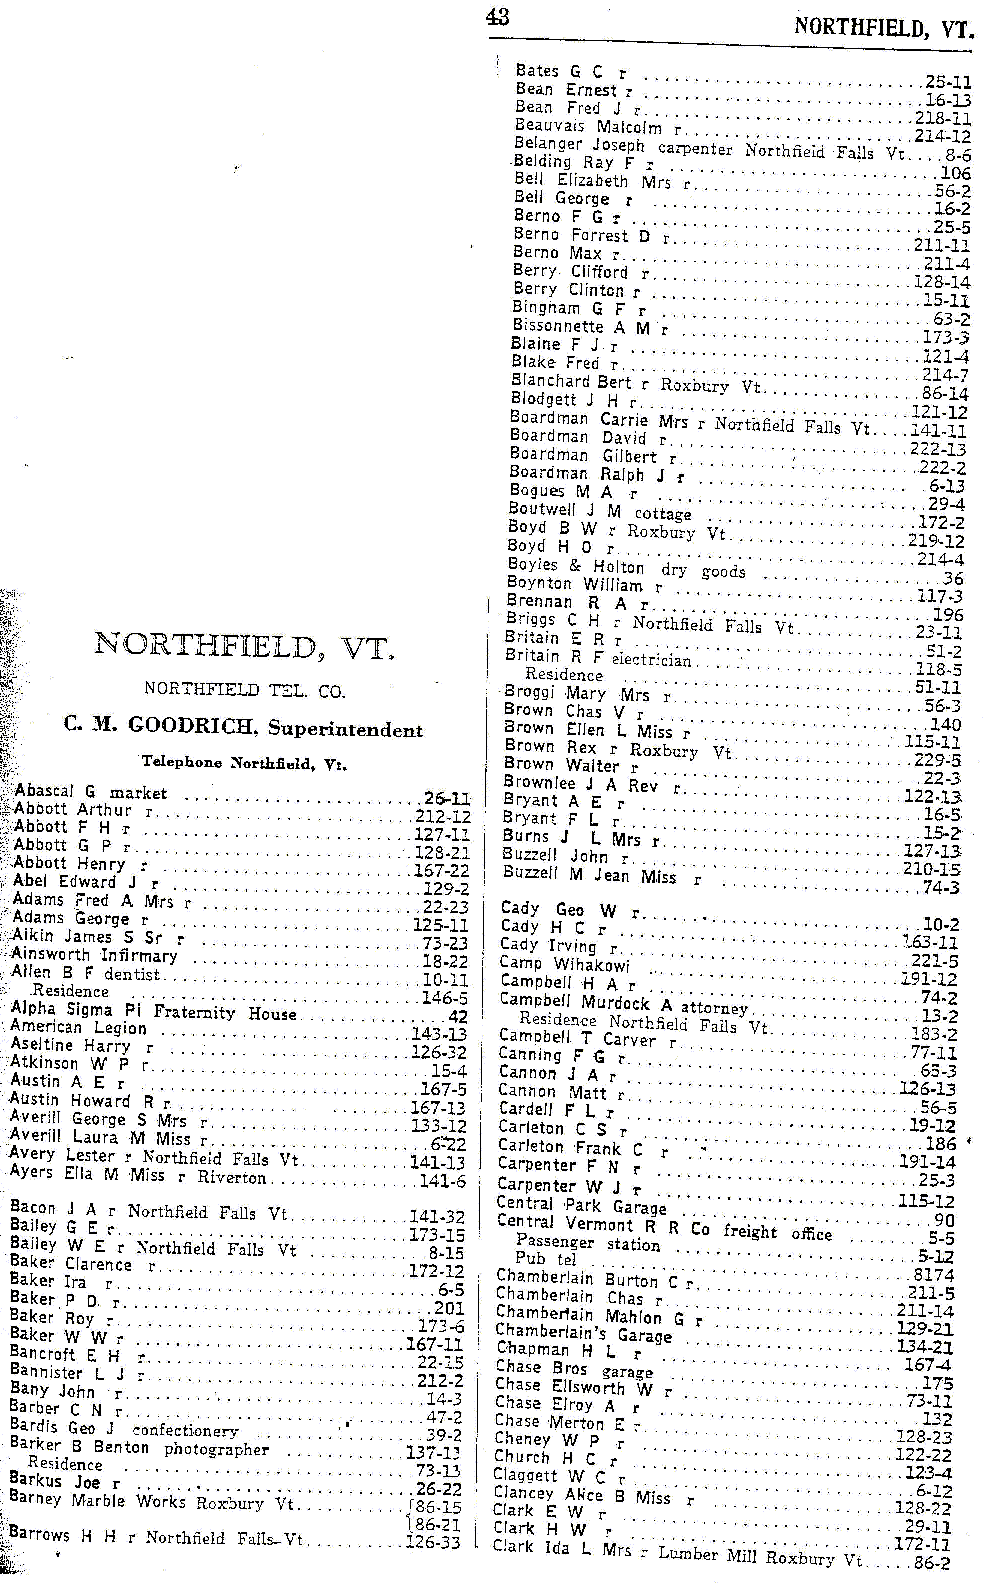 1928 Northfield Vt Telephone Book - Page 43